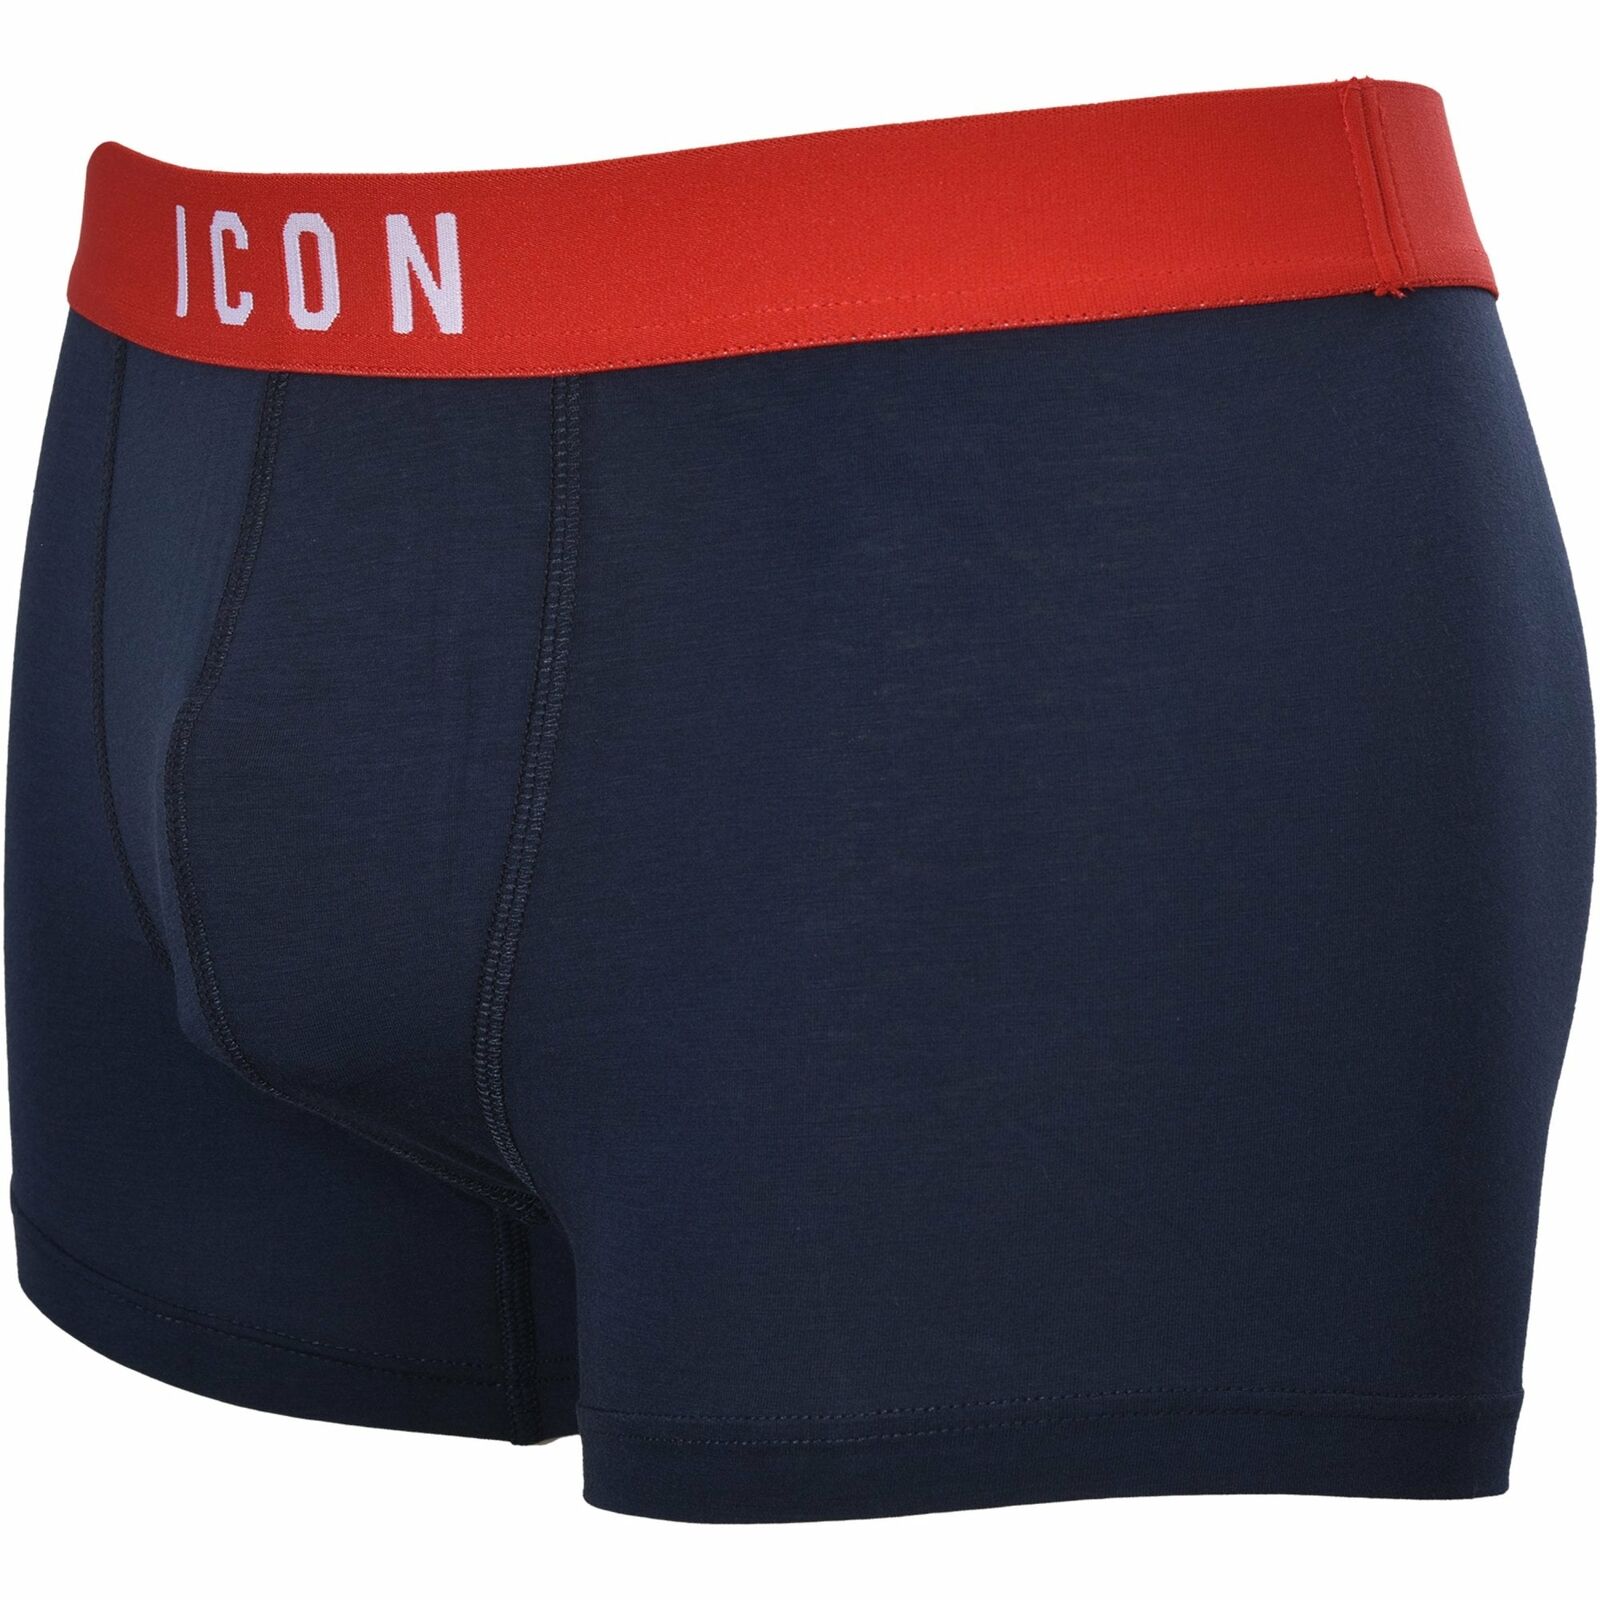 DSquared2 ICON Logo Men's Boxer Trunk, Navy/red | eBay